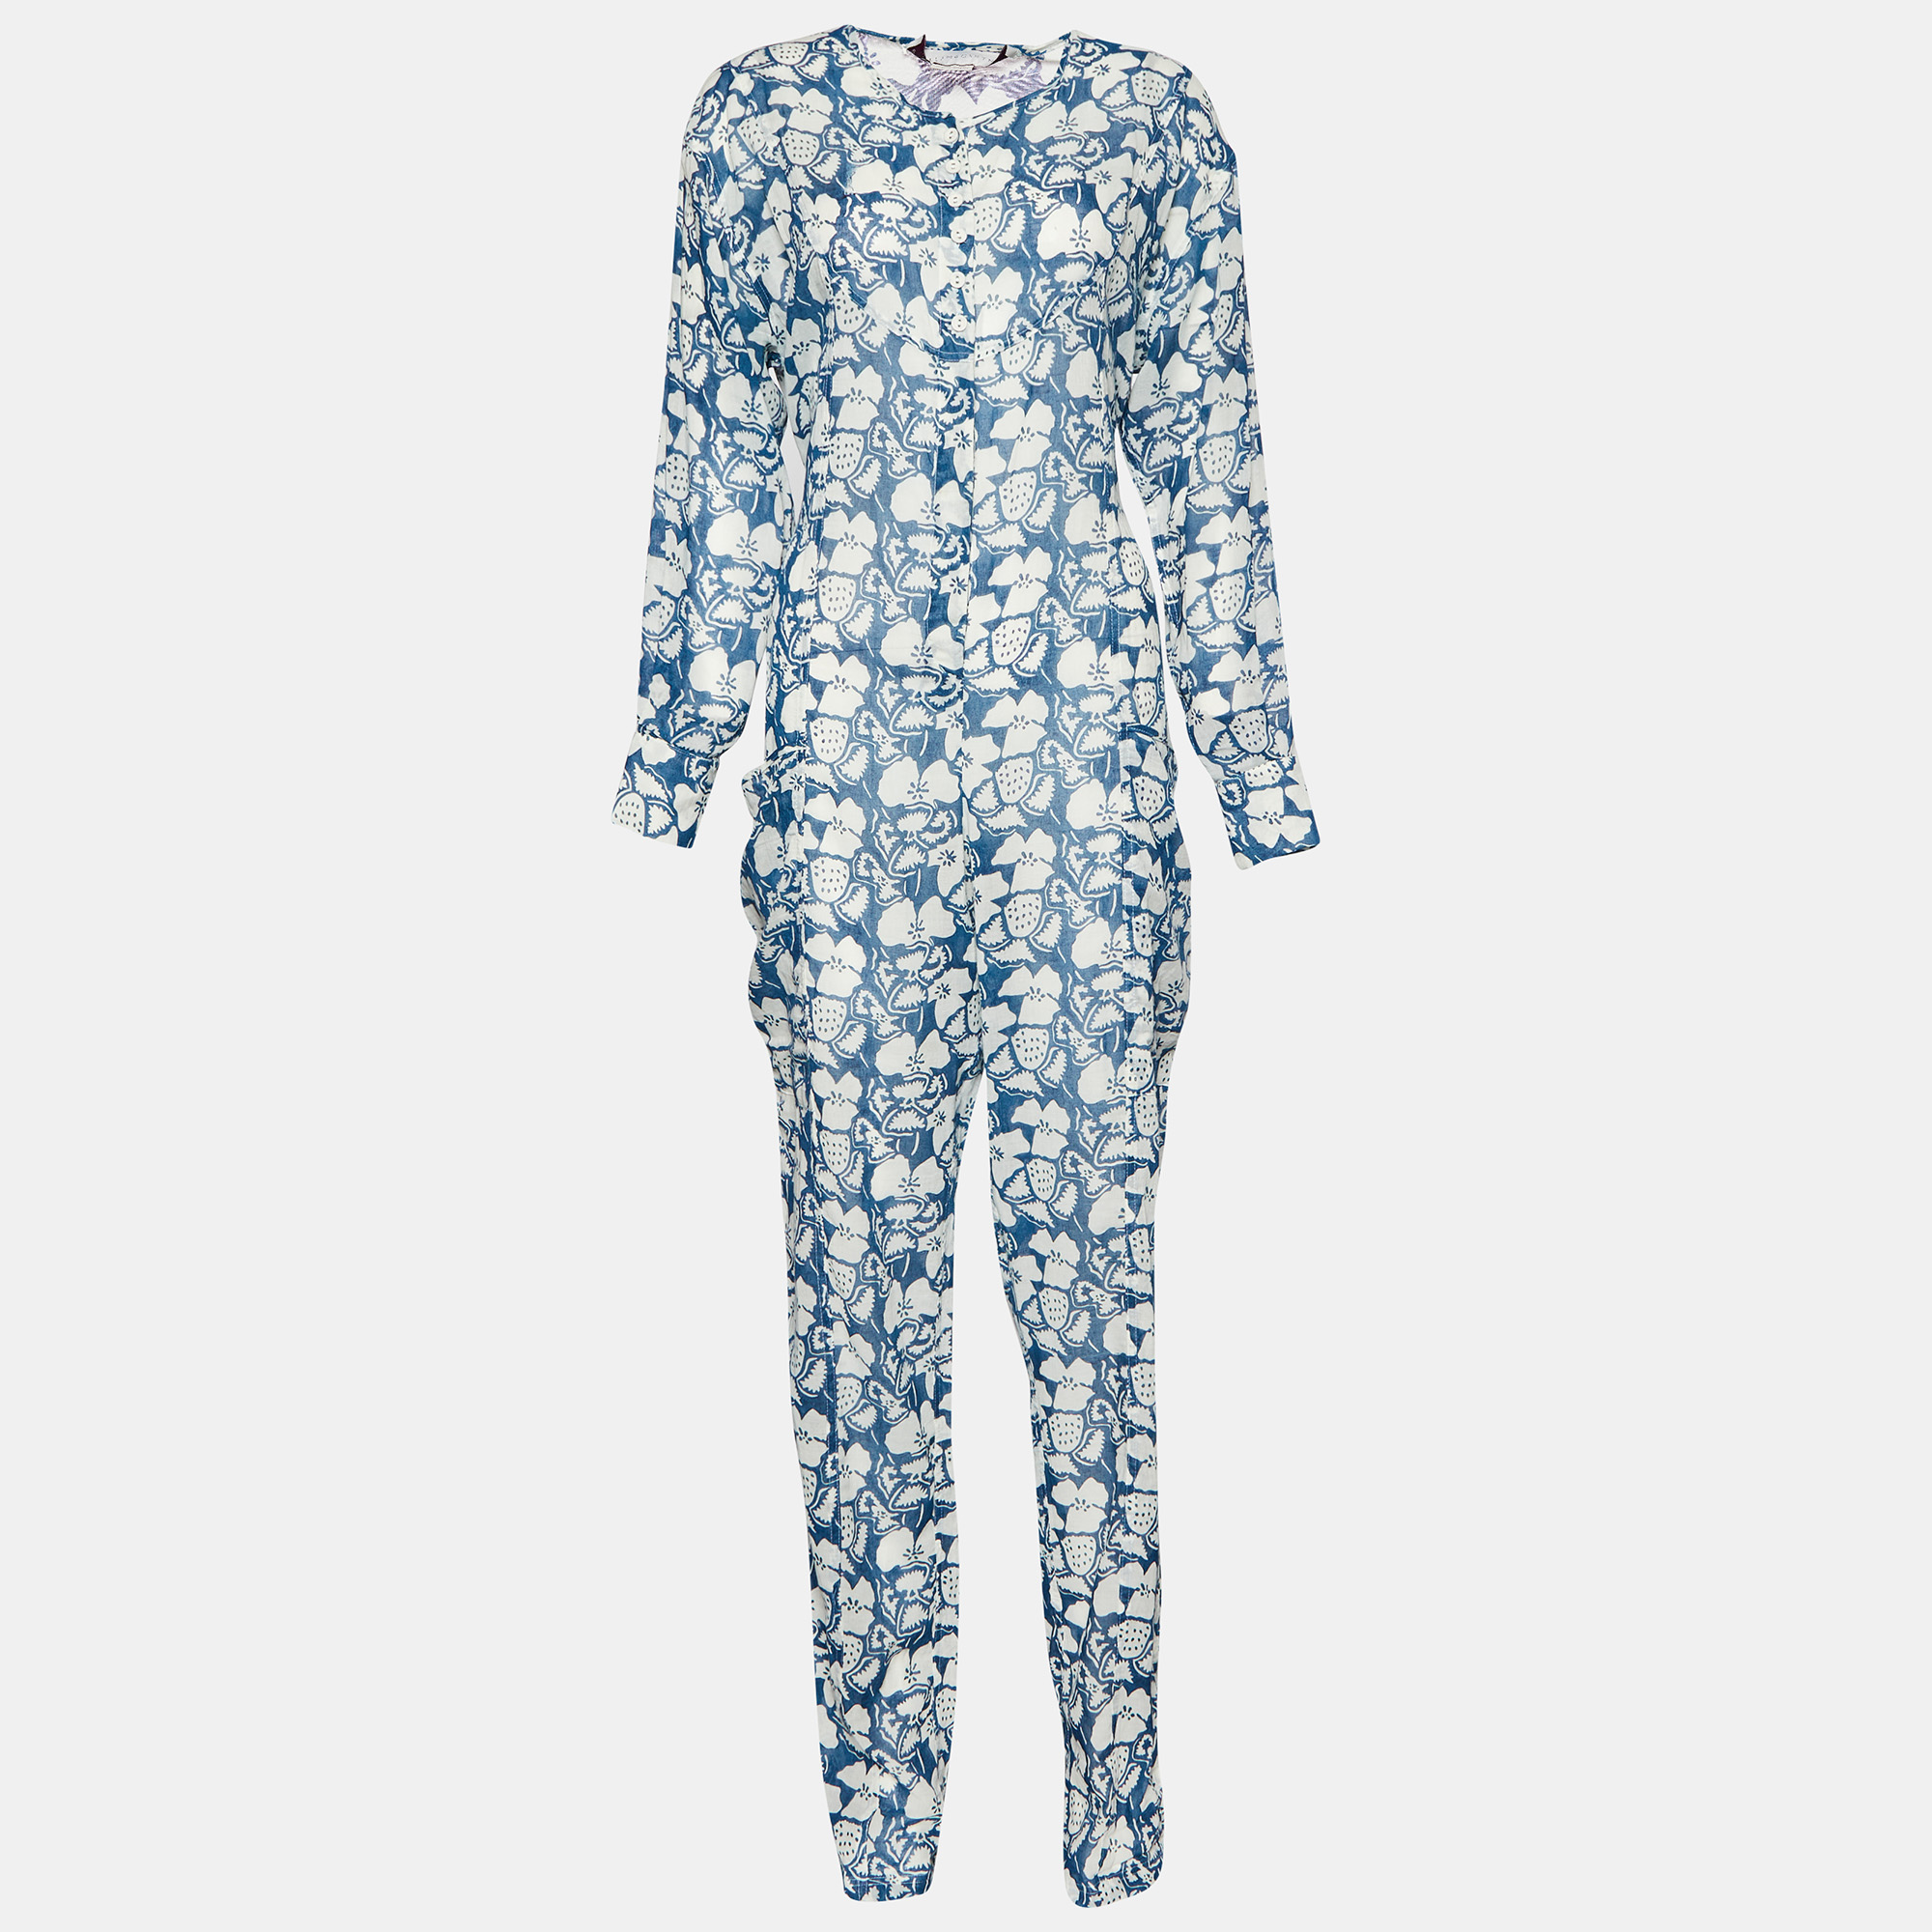 Stella mccartney blue & white printed cotton oversized jumpsuit s